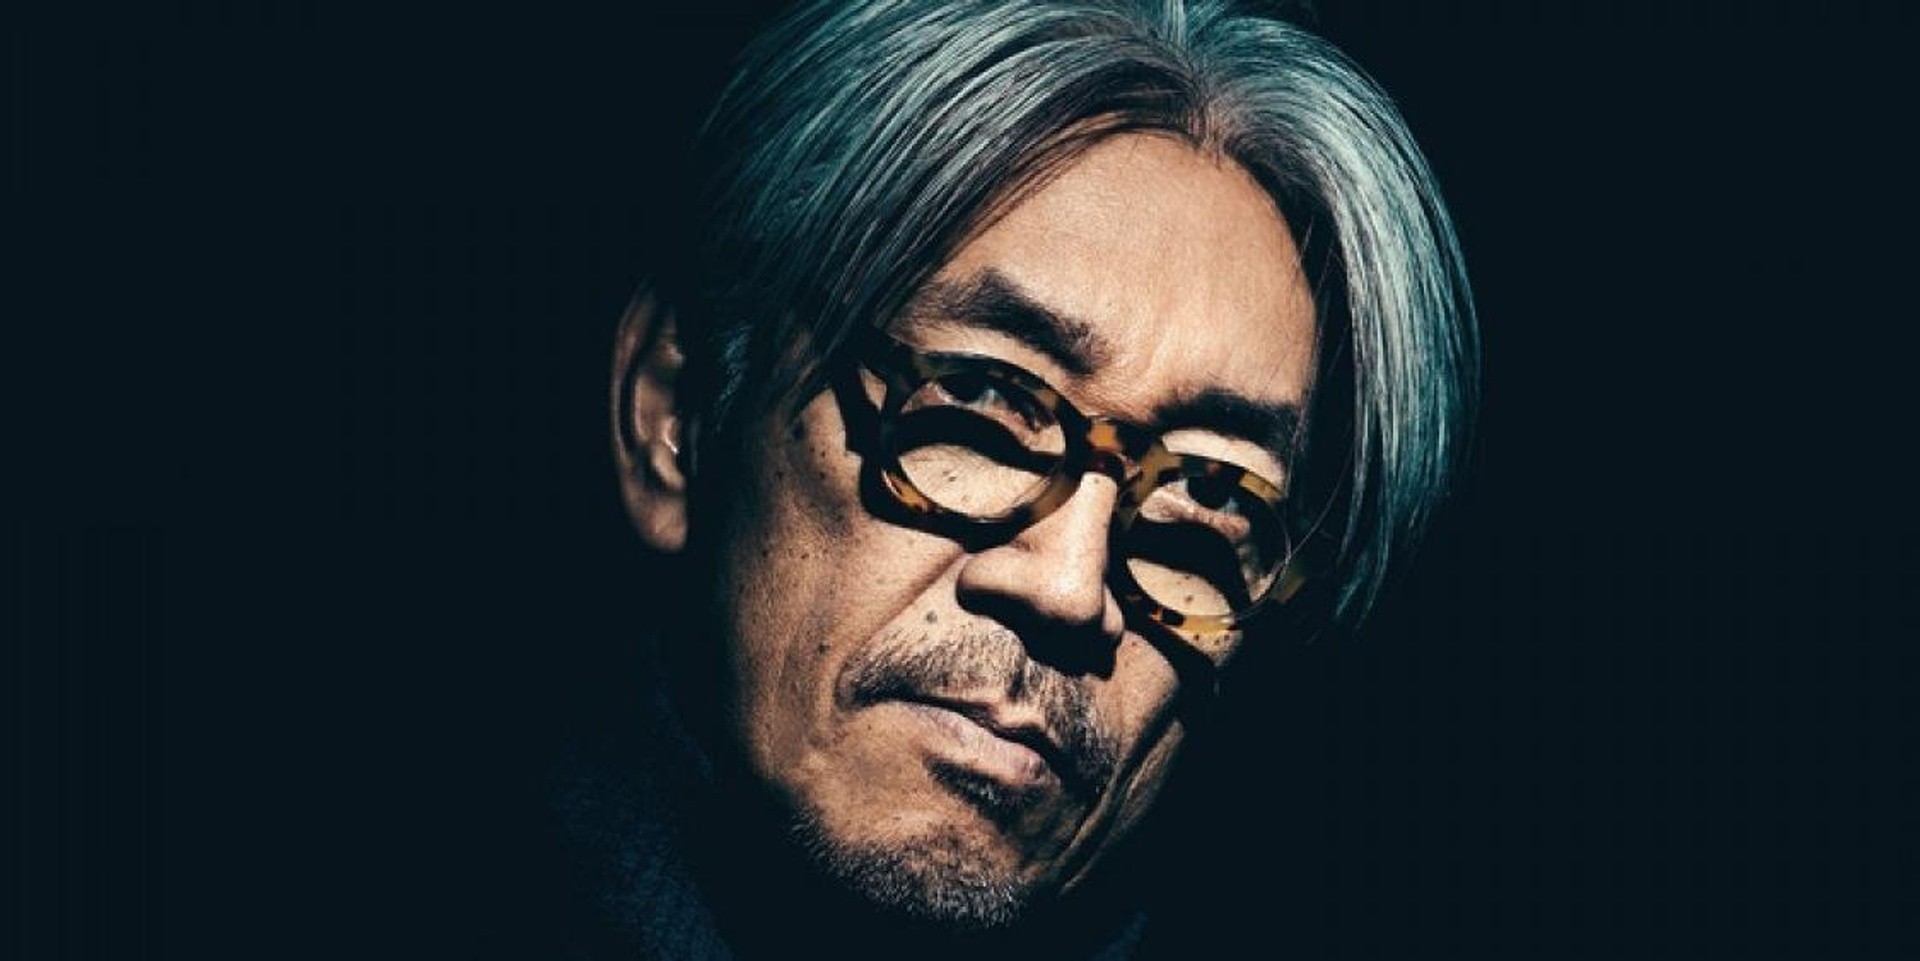 BREAKING: Ryuichi Sakamoto to perform in Singapore this May